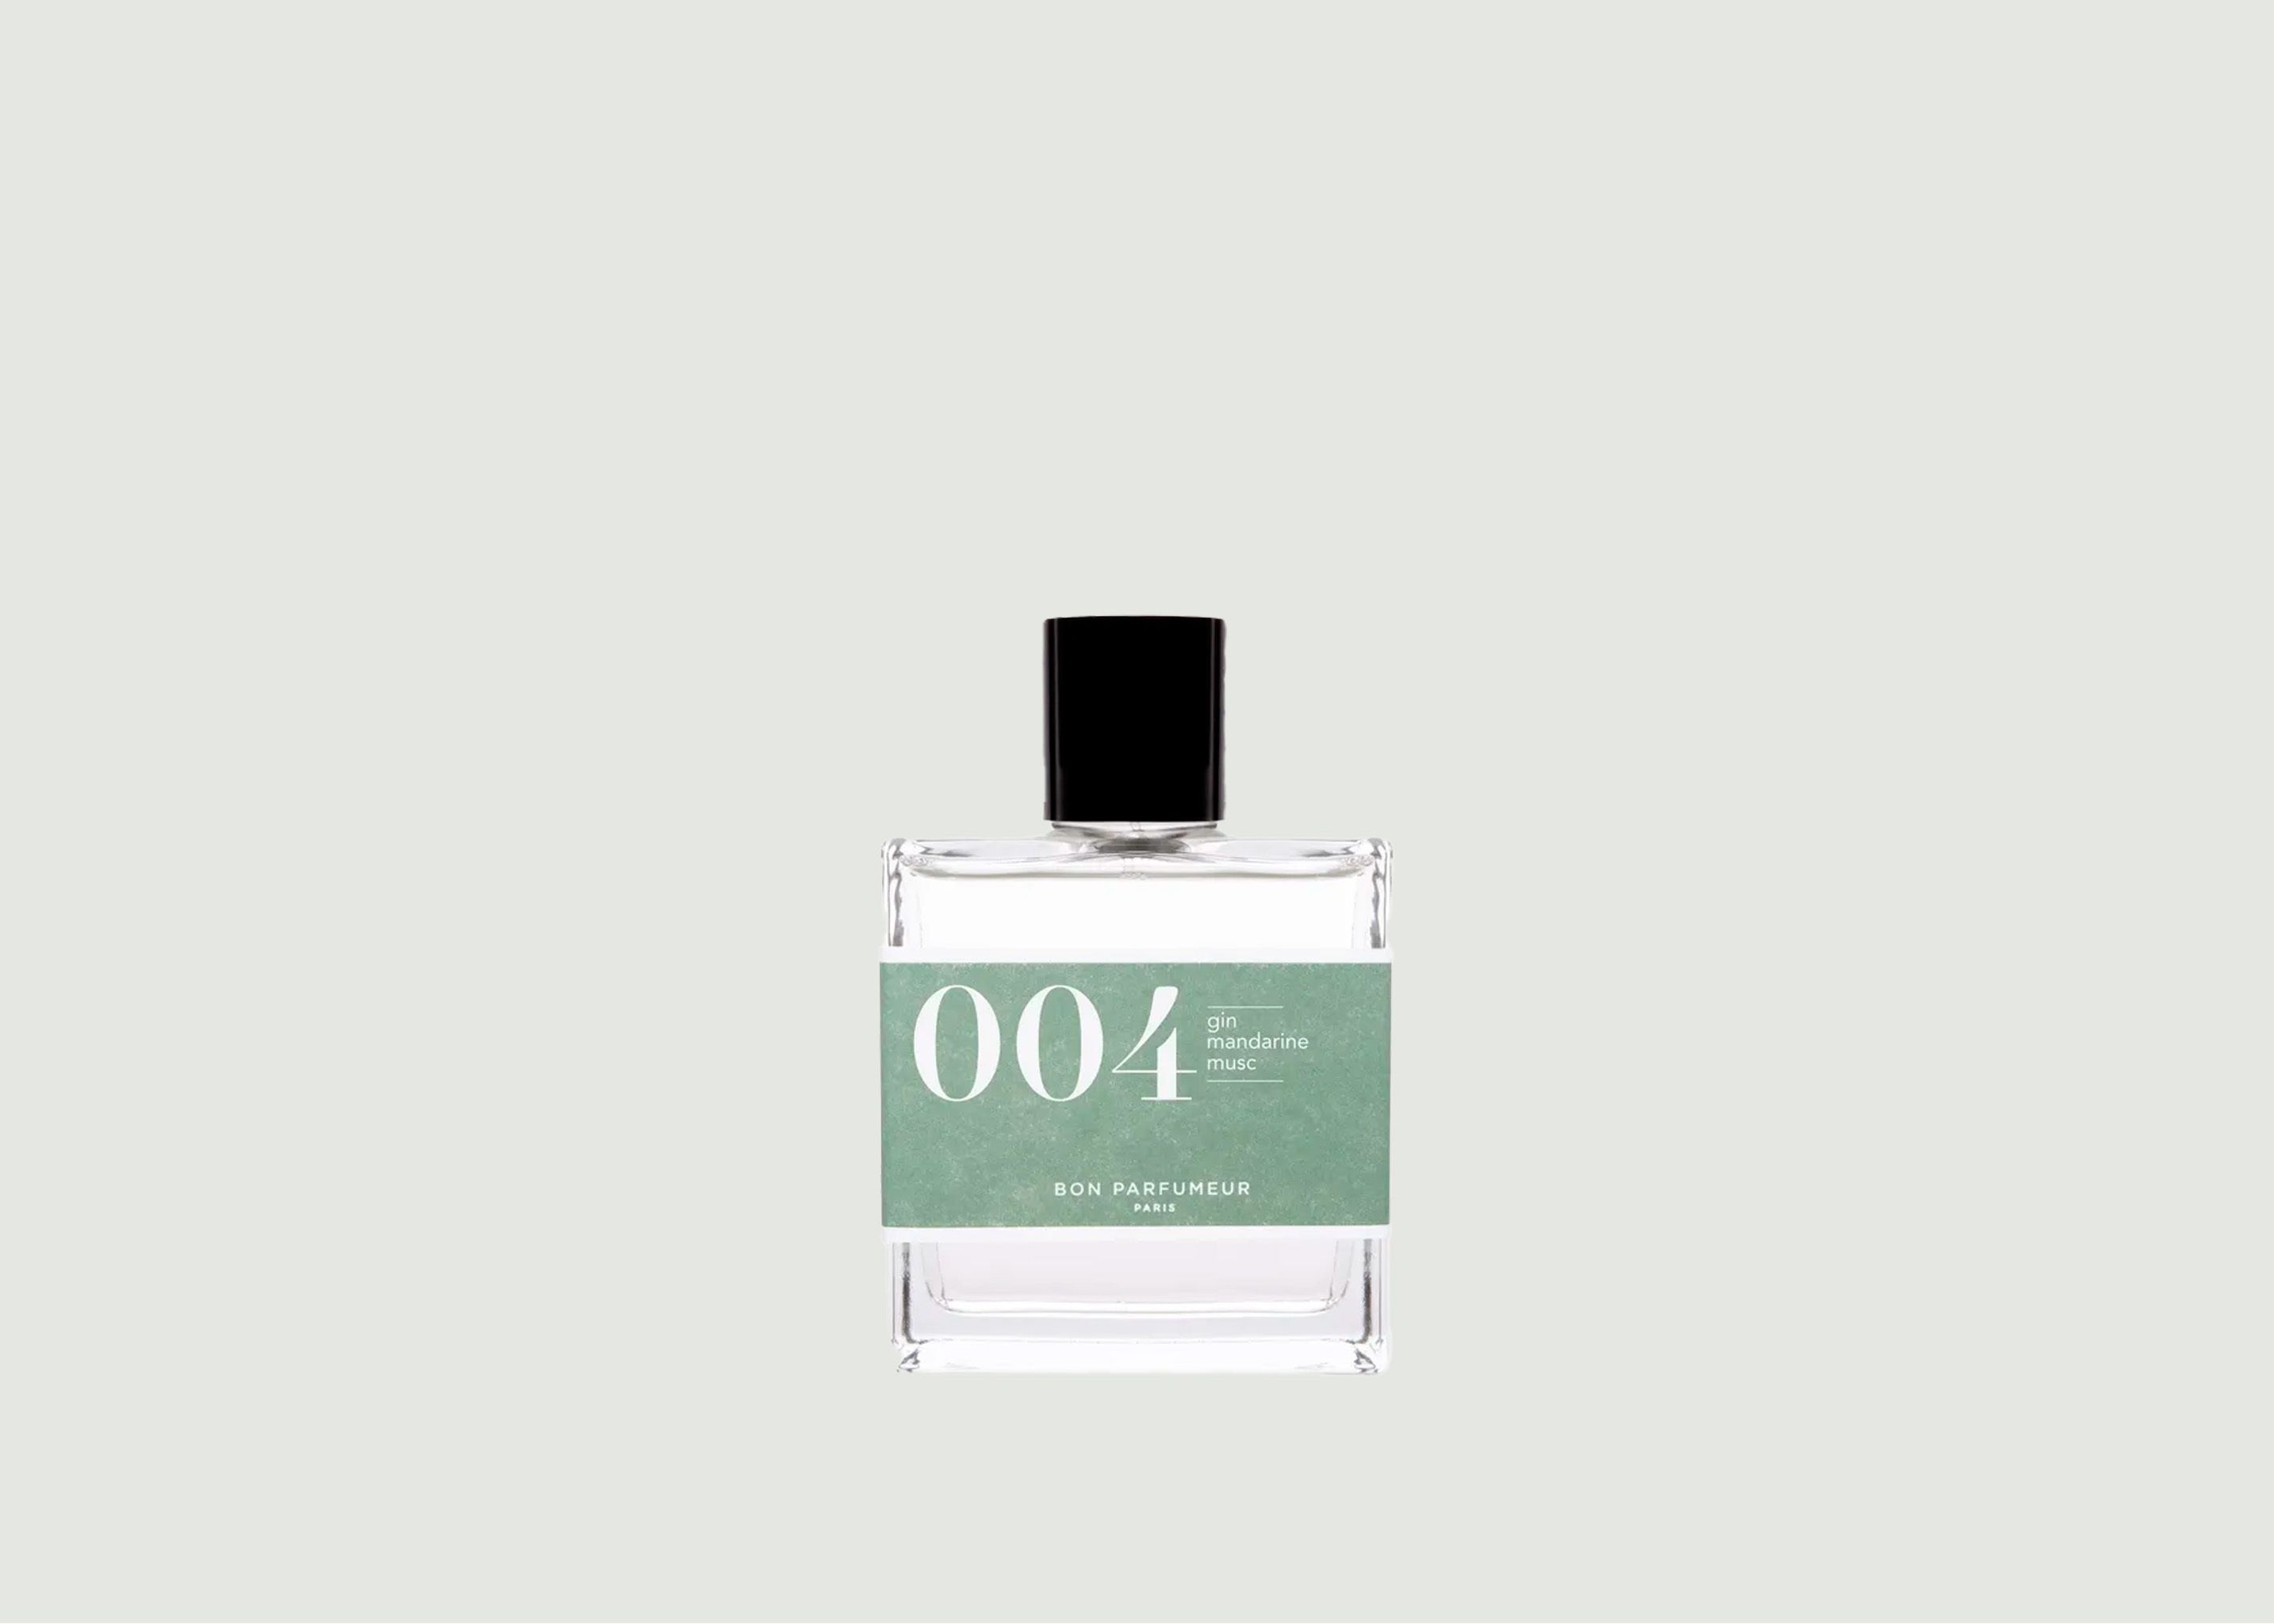 Eau de parfum 004 : Gin, mandarine, musc - Bon Parfumeur